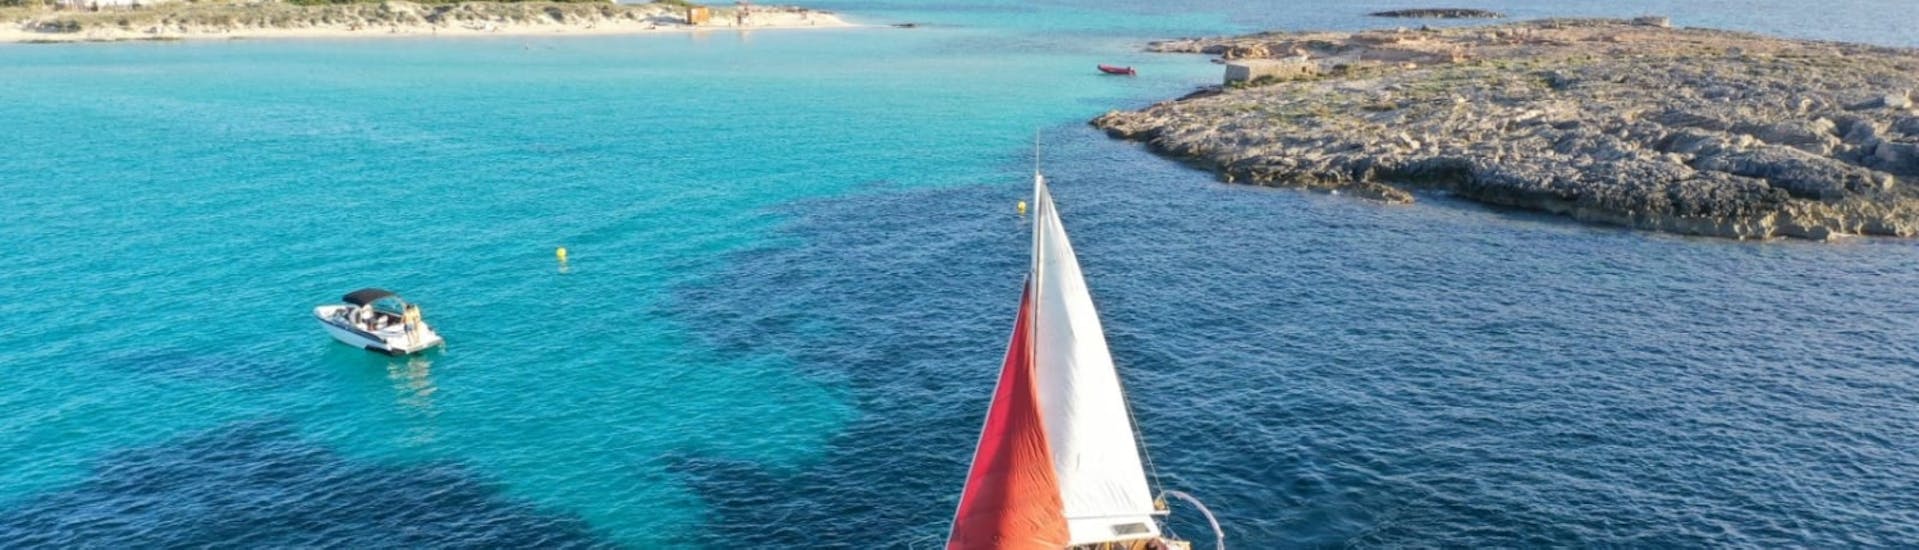 Location de bateau à Formentera avec skipper (jusqu'à 9 personnes) avec Barco Rent Formentera.